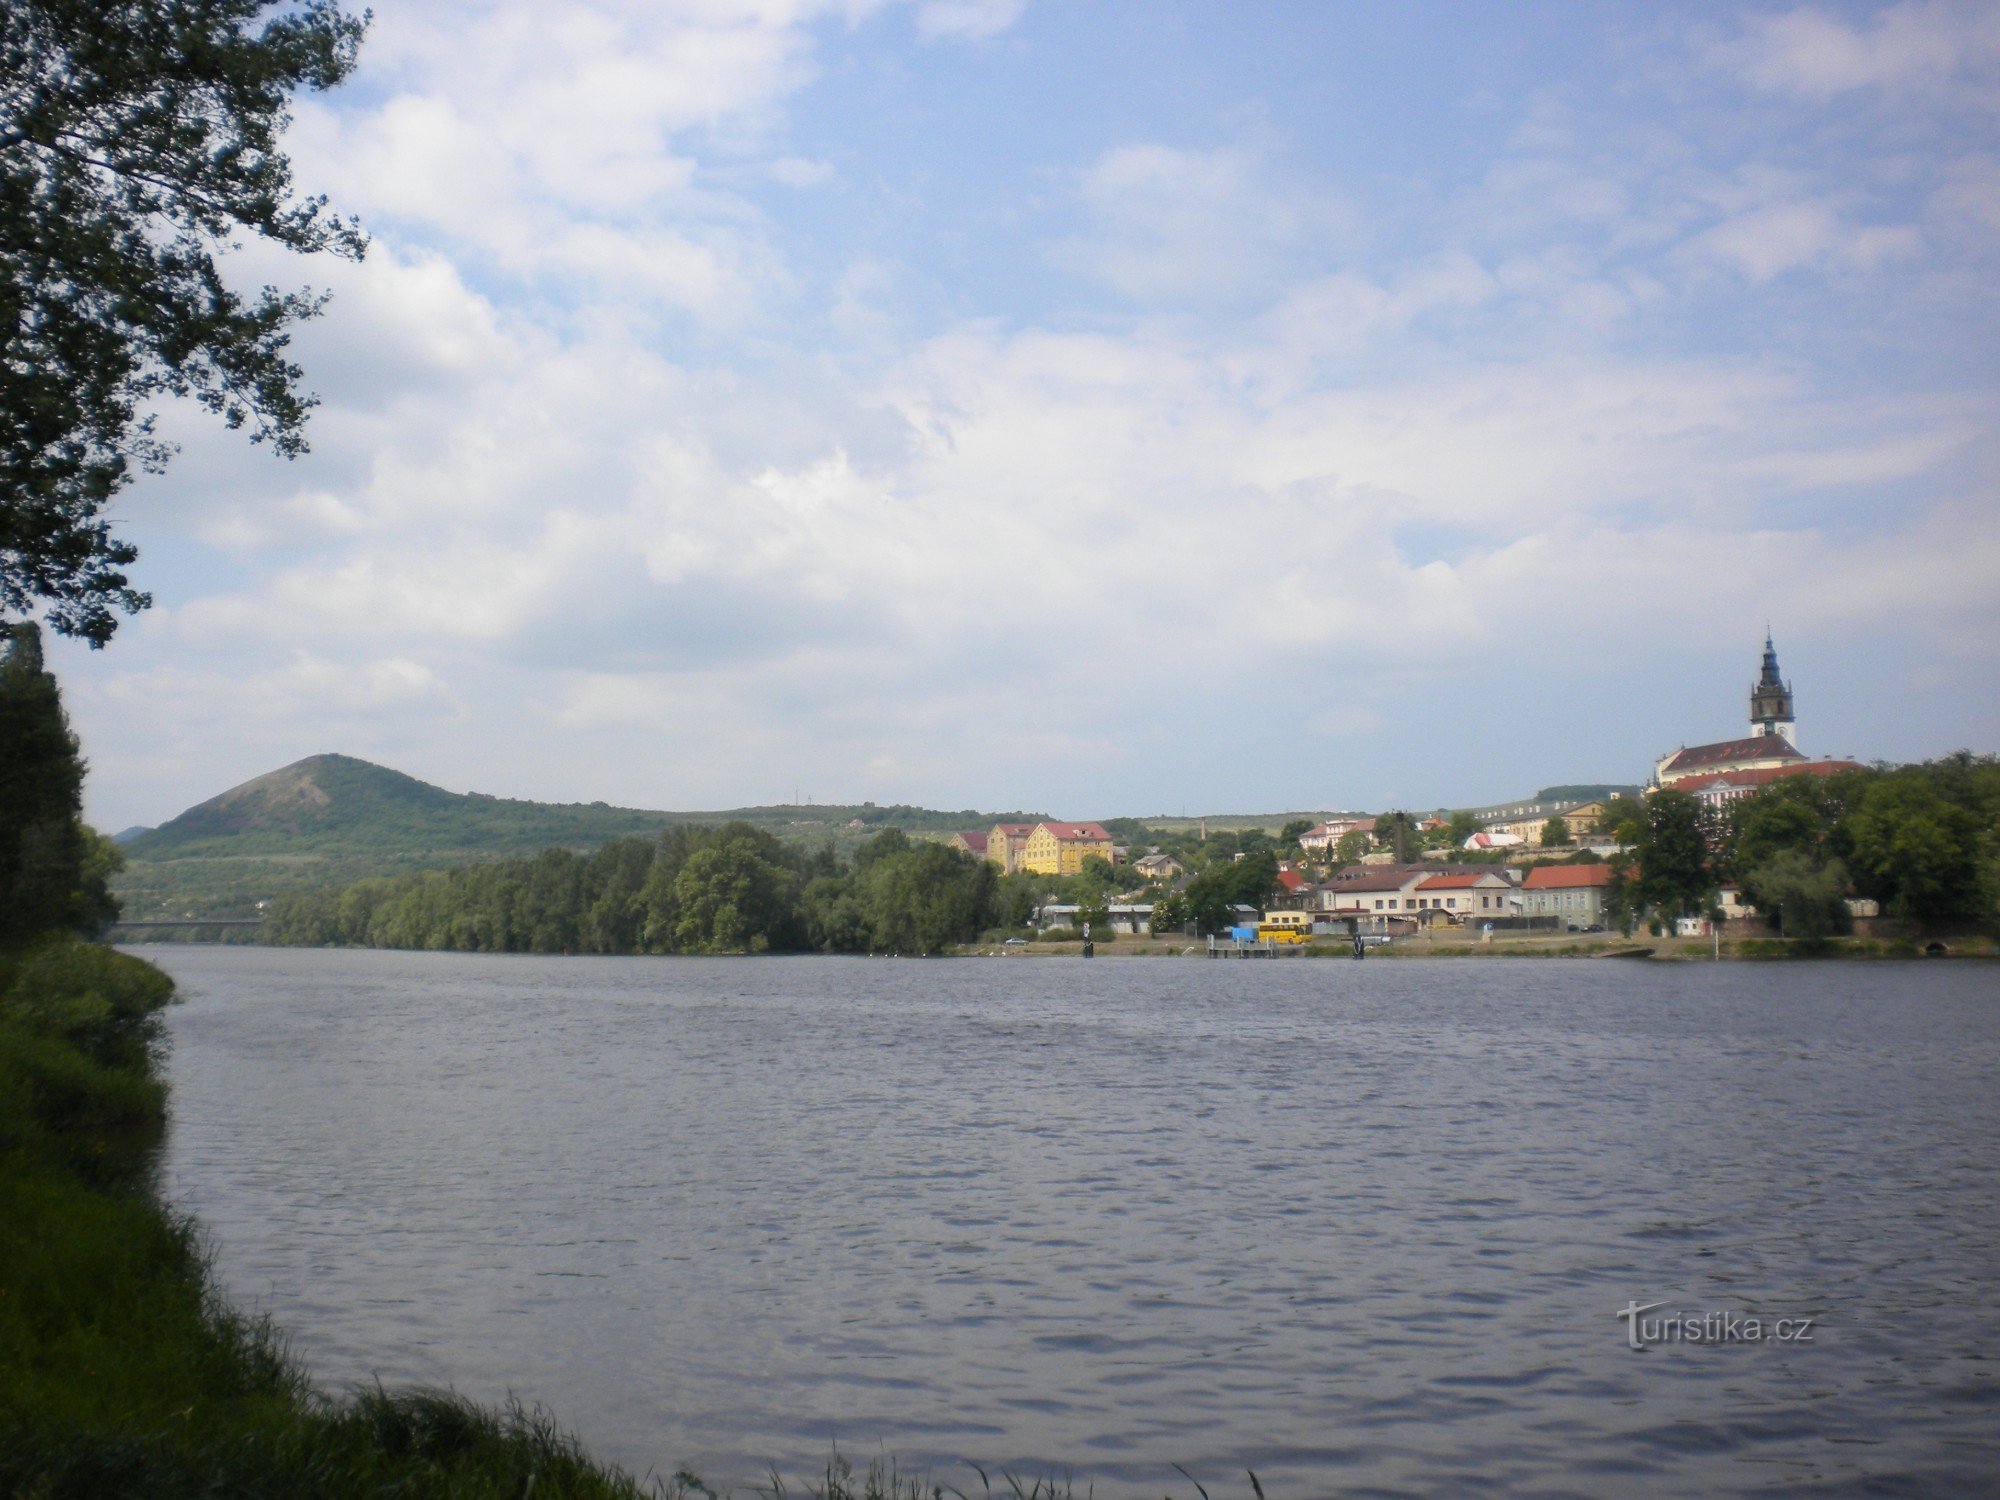 Pogled s Tyrškega mostu na Litoměřice in hrib Radobyl.